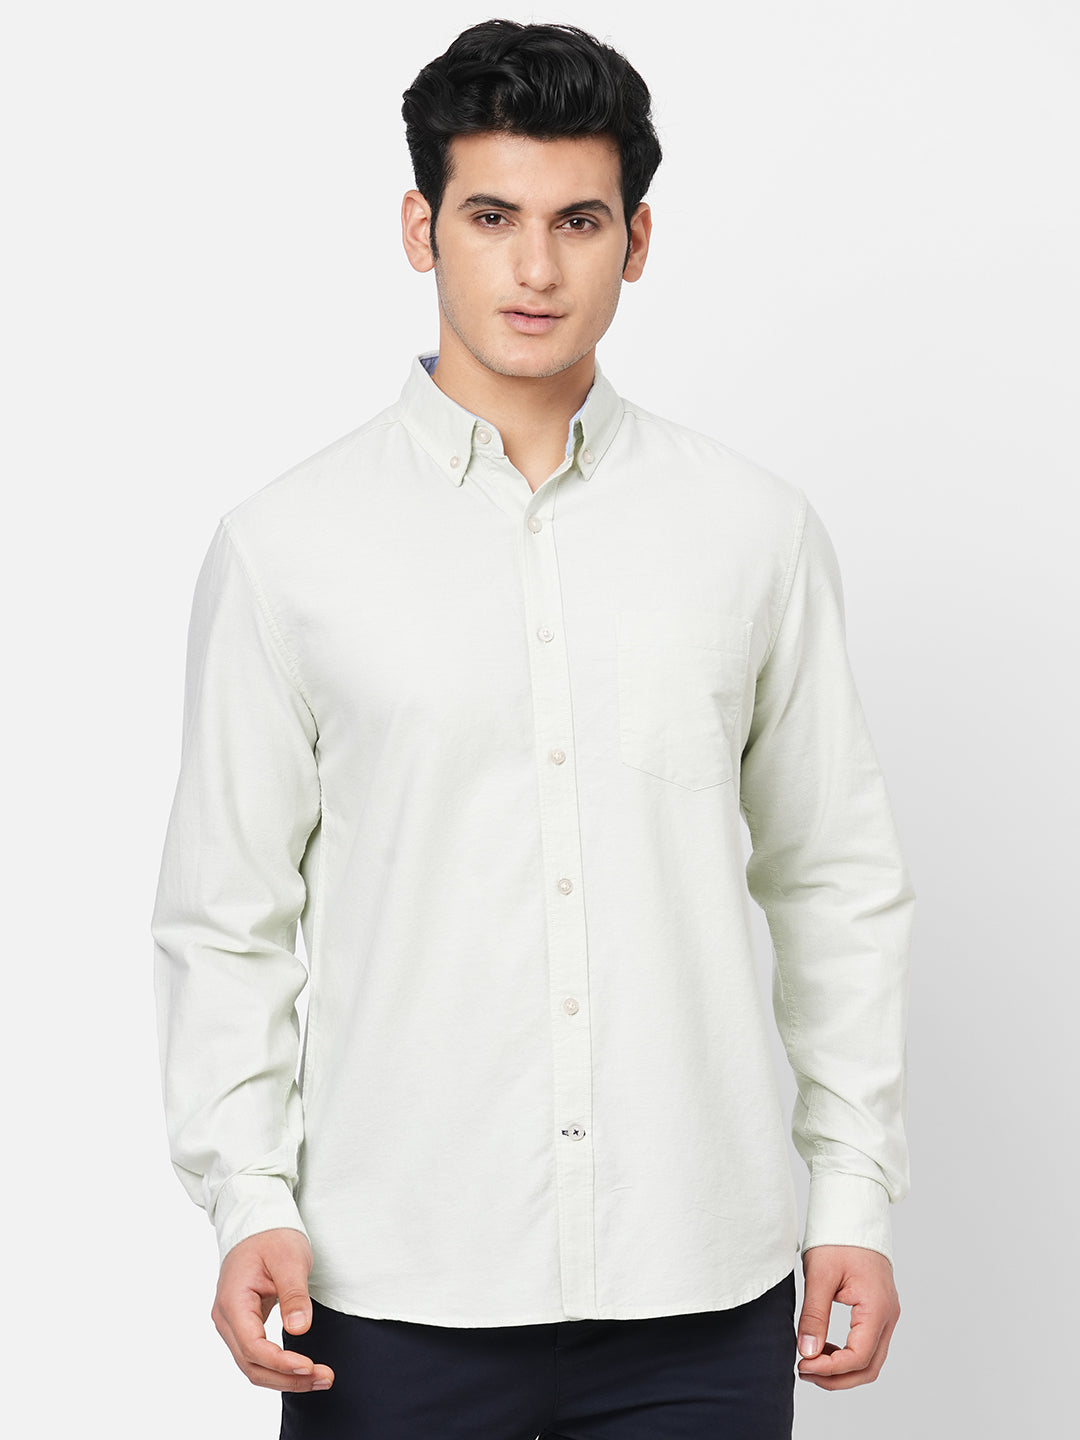 Men's Green Oxford Cotton Button down Collar Long Sleeved Shirt